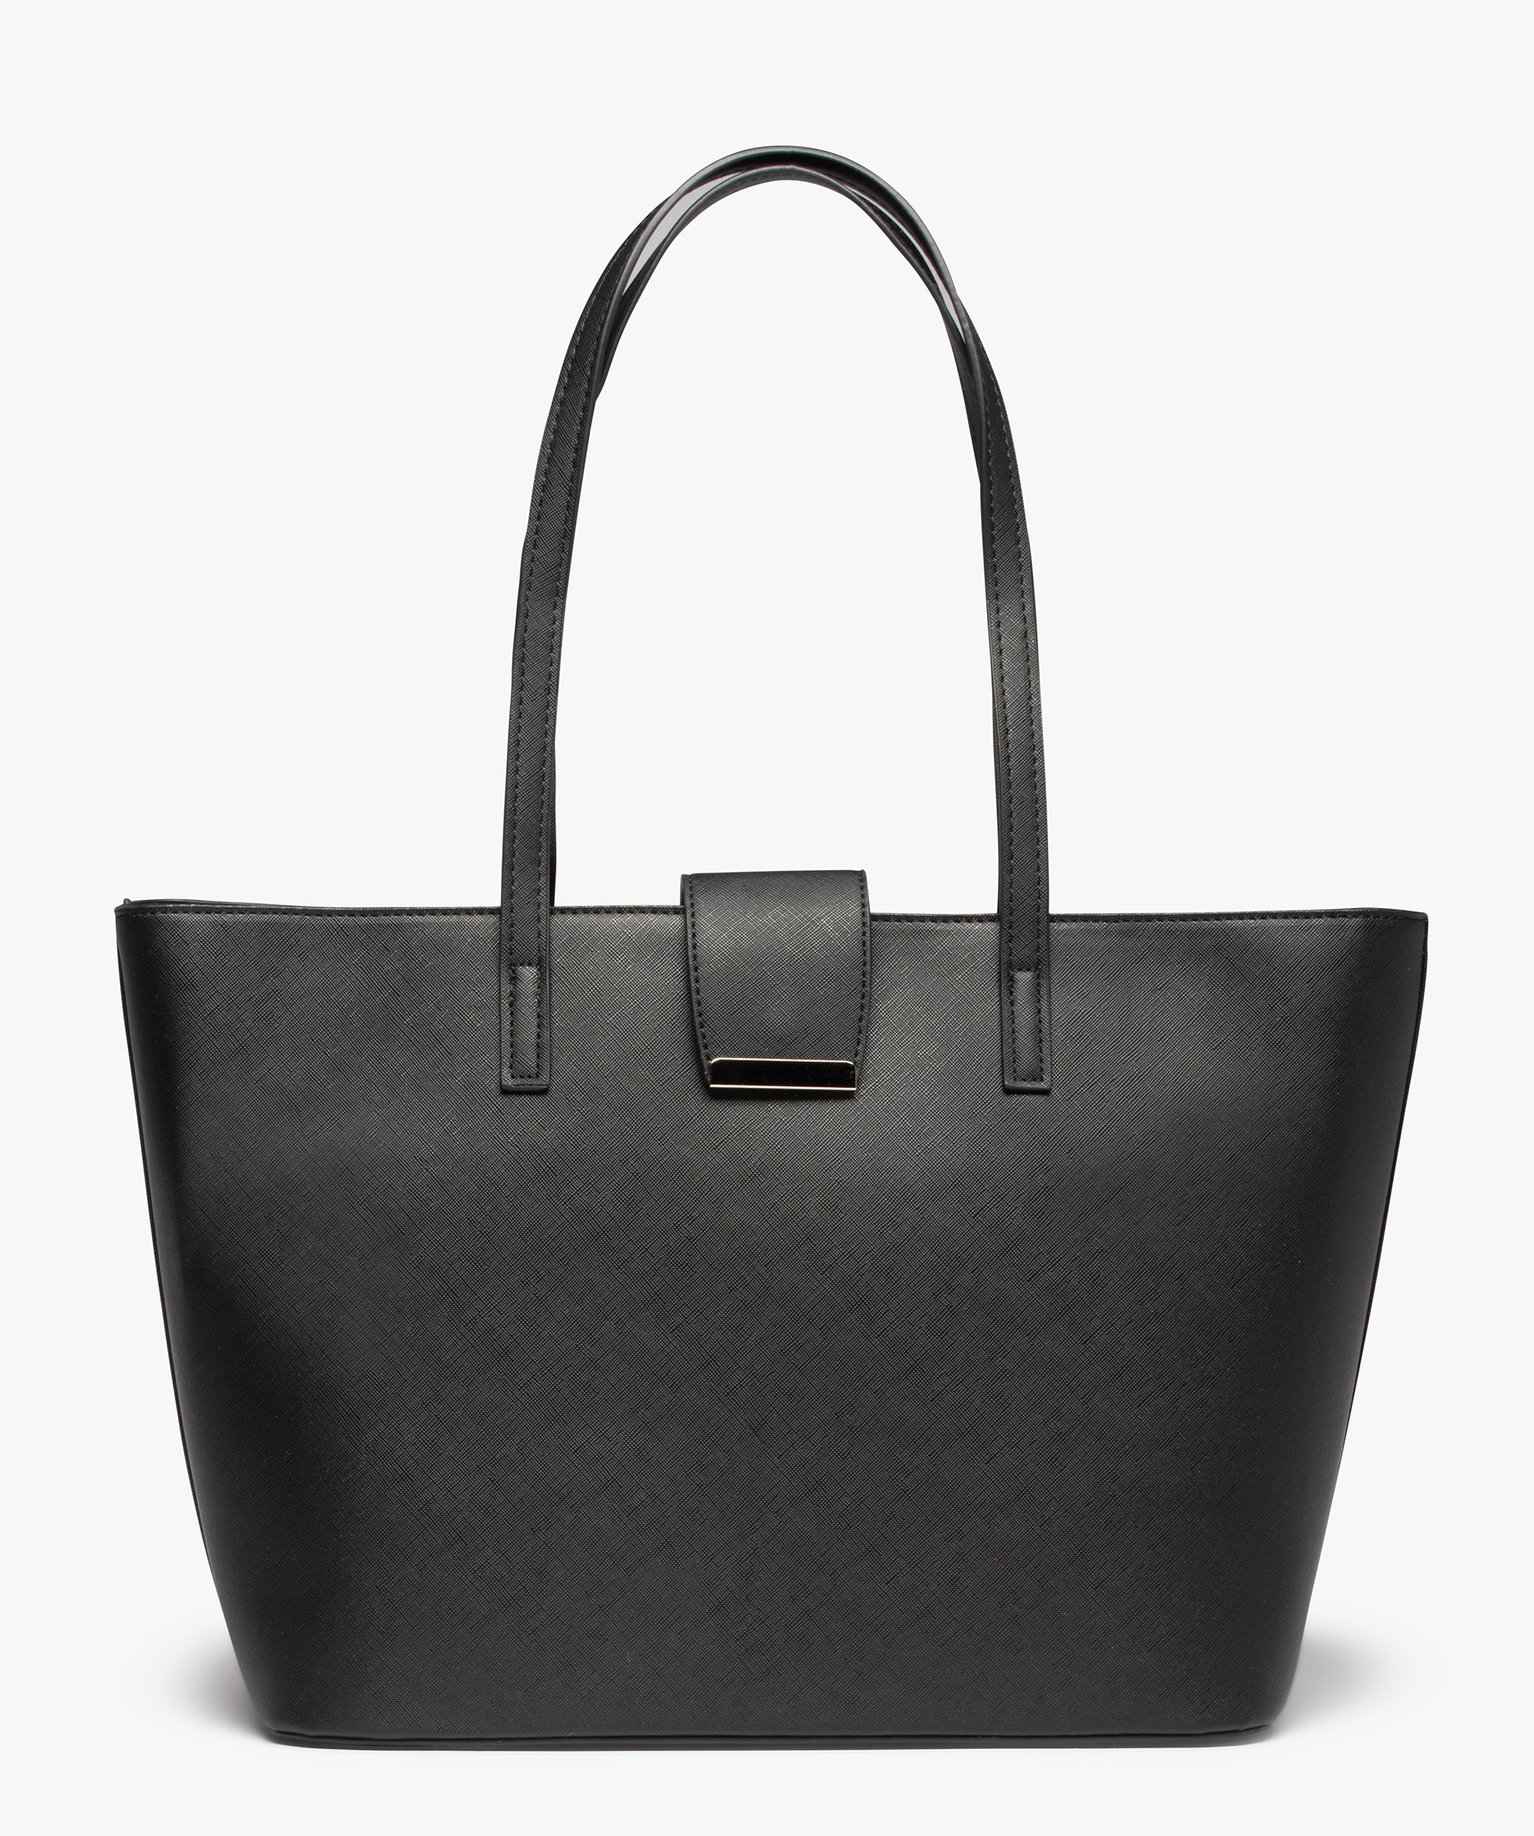 sac cabas femme rigide en matiere texturee noir sacs a main